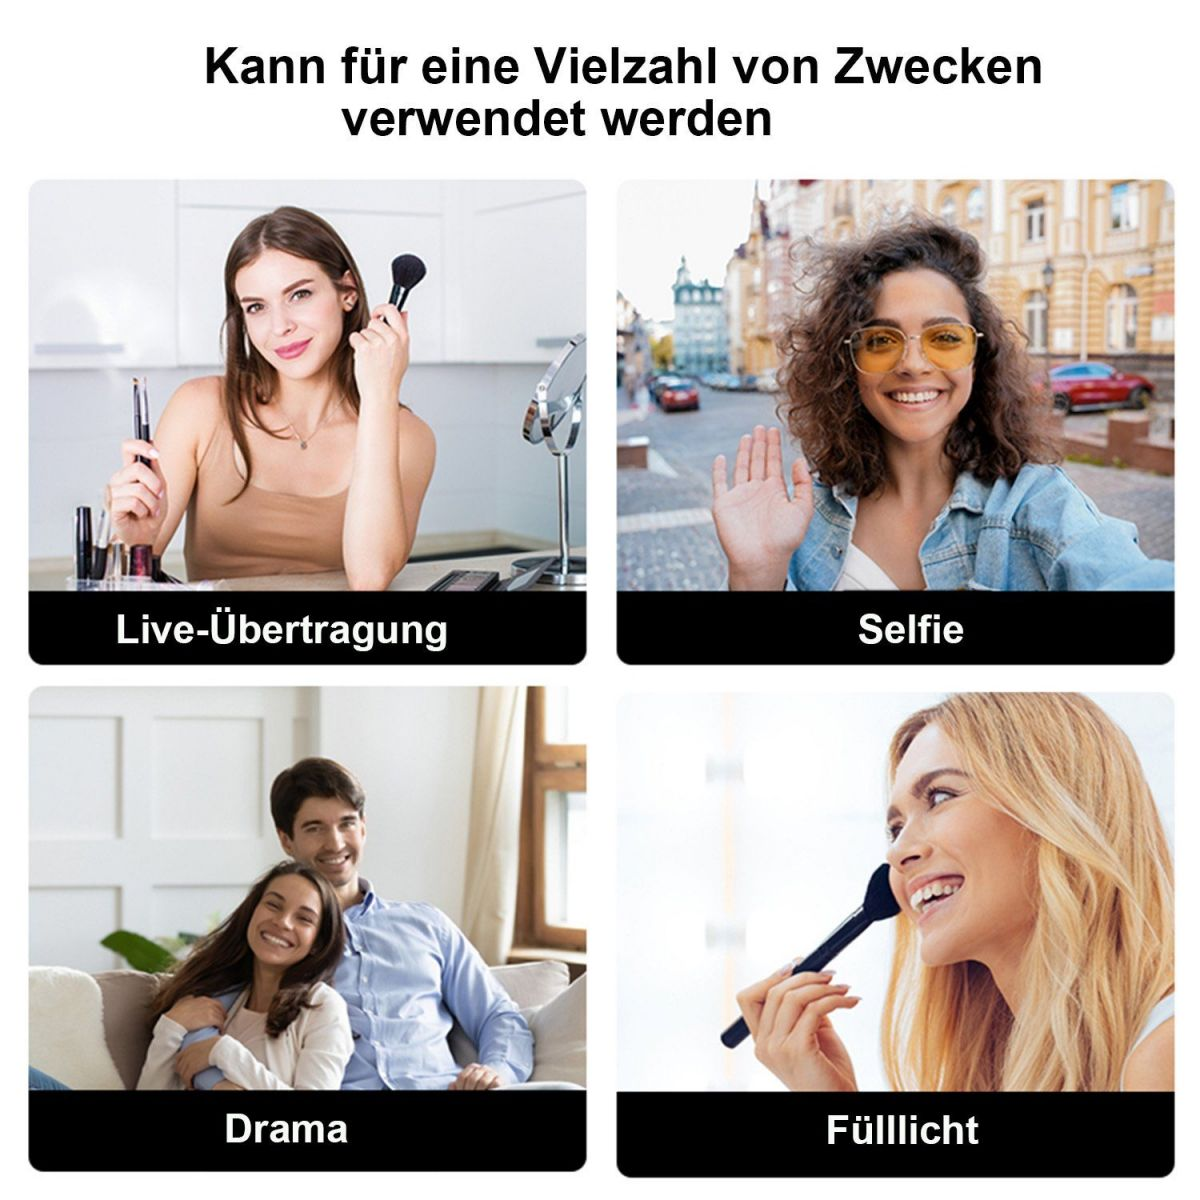 Selfie Gimbal schwarz Bluetooth Gimbal Stativ Smartphone, Selfie-Stange, Selfie-Stick, Stock DIIDA